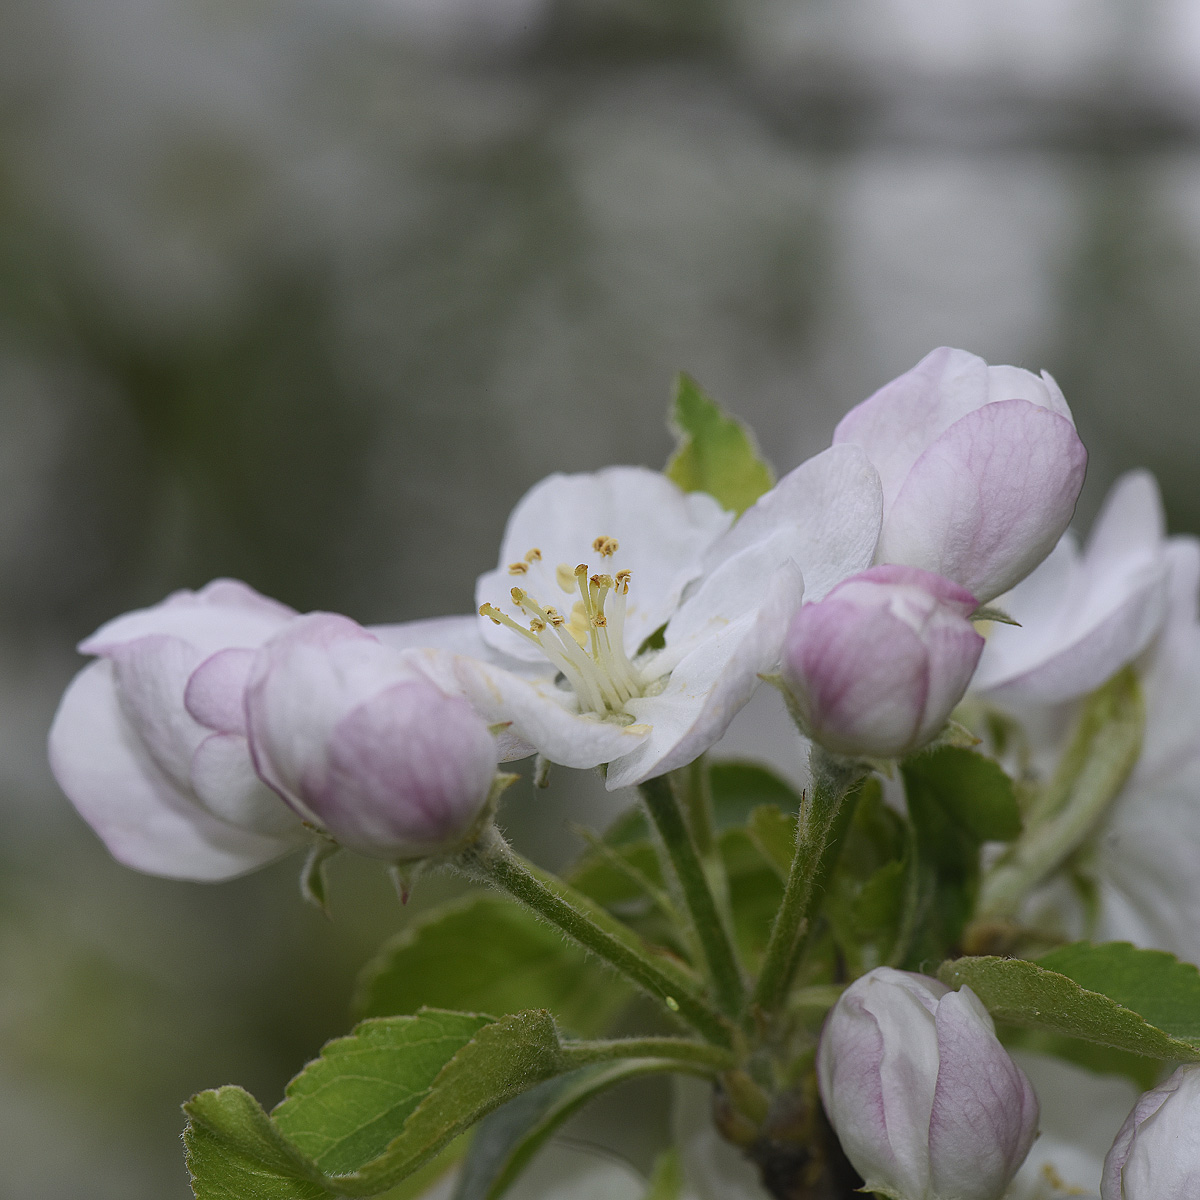 Apple blossom in the garden...